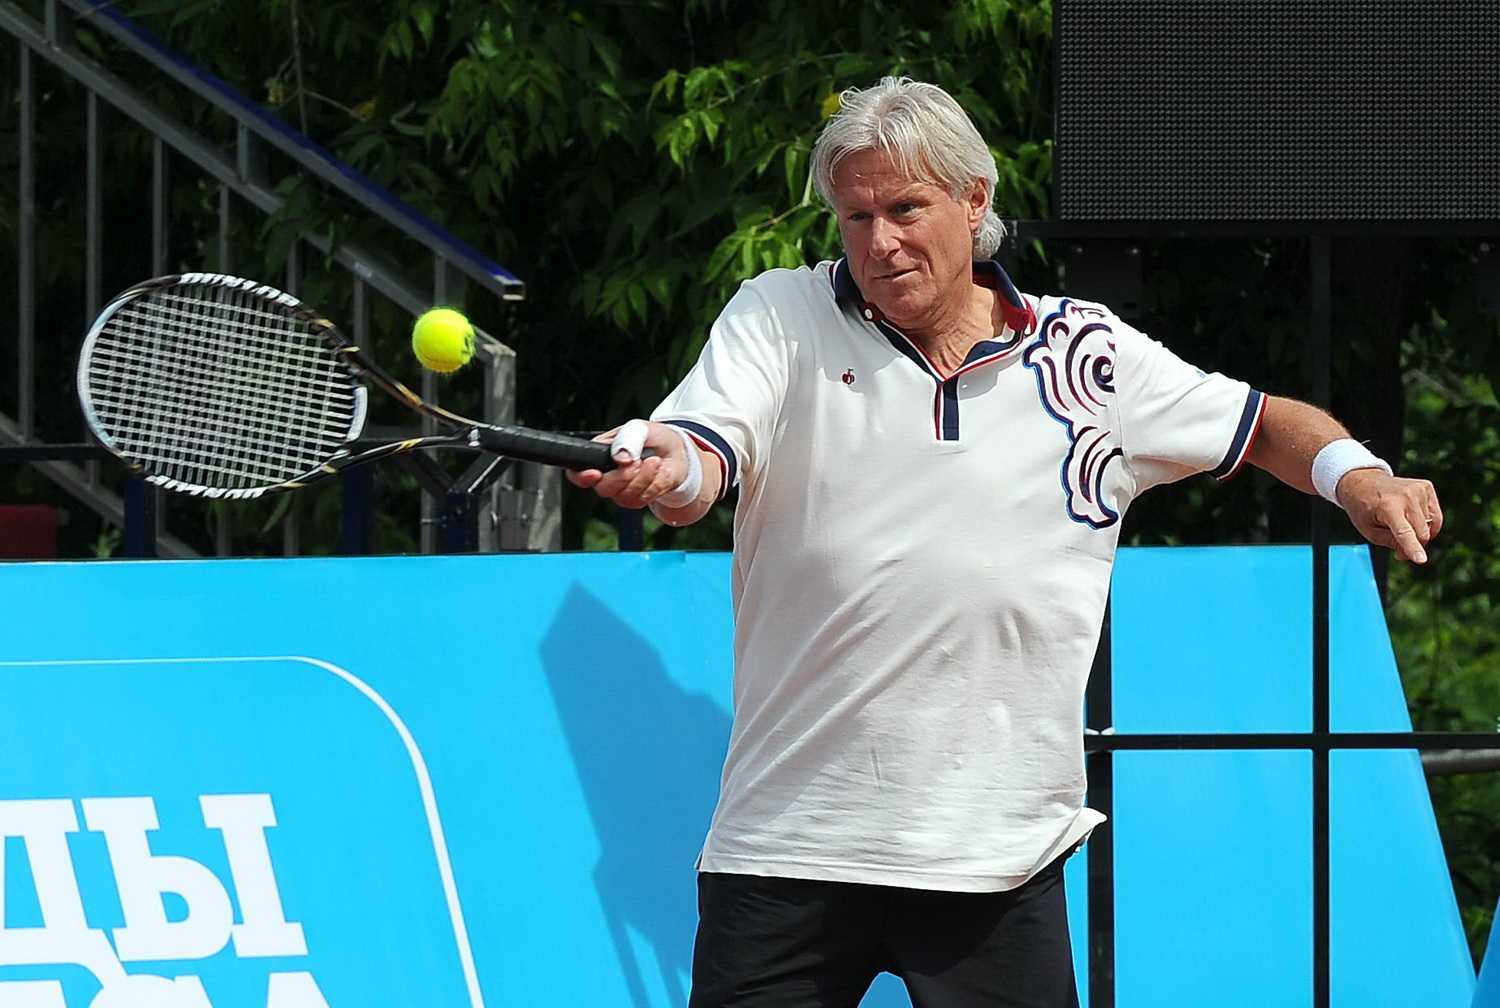 Бьорн борг /  bjorn borg - биография теннисиста, фото и видео - теннис портал tennisportal.ru